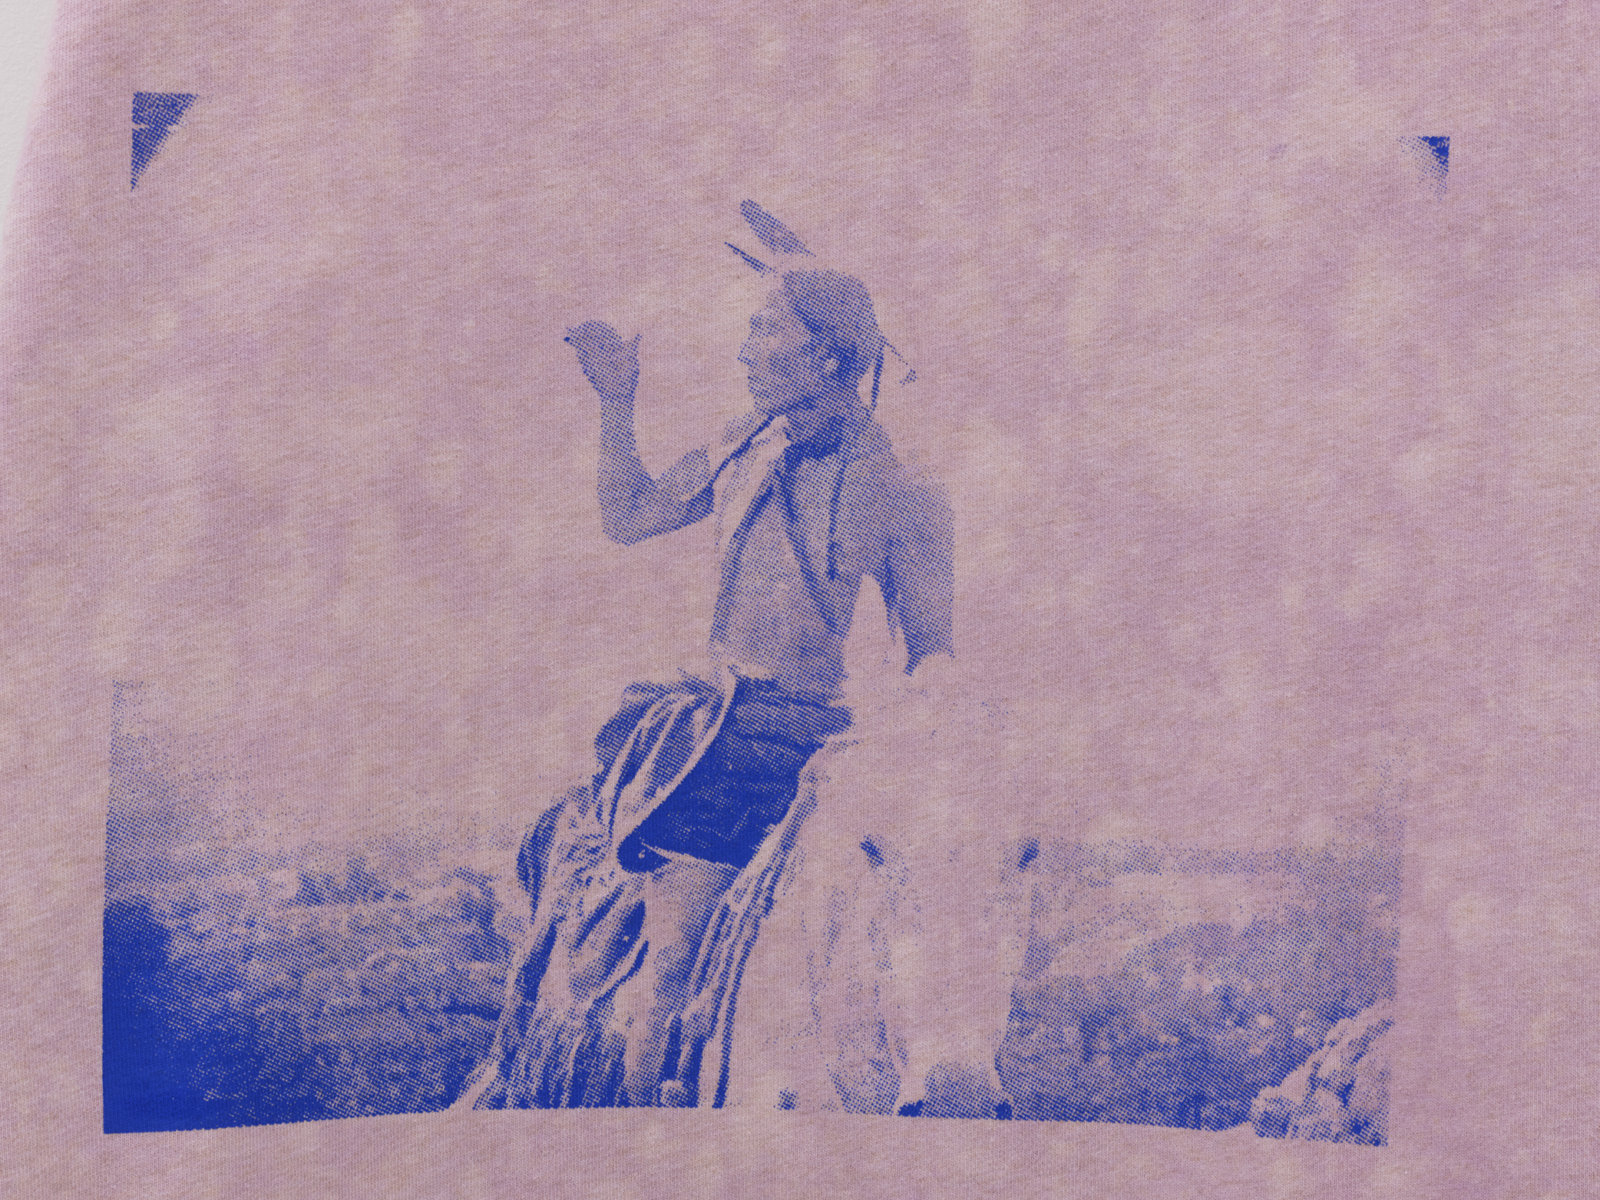 Duane Linklater, whiteeagle (detail), 2020, handmade sweater, cochineal dye, silkscreen, nails, 38 x 20 x 5 in. (97 x 51 x 13 cm)